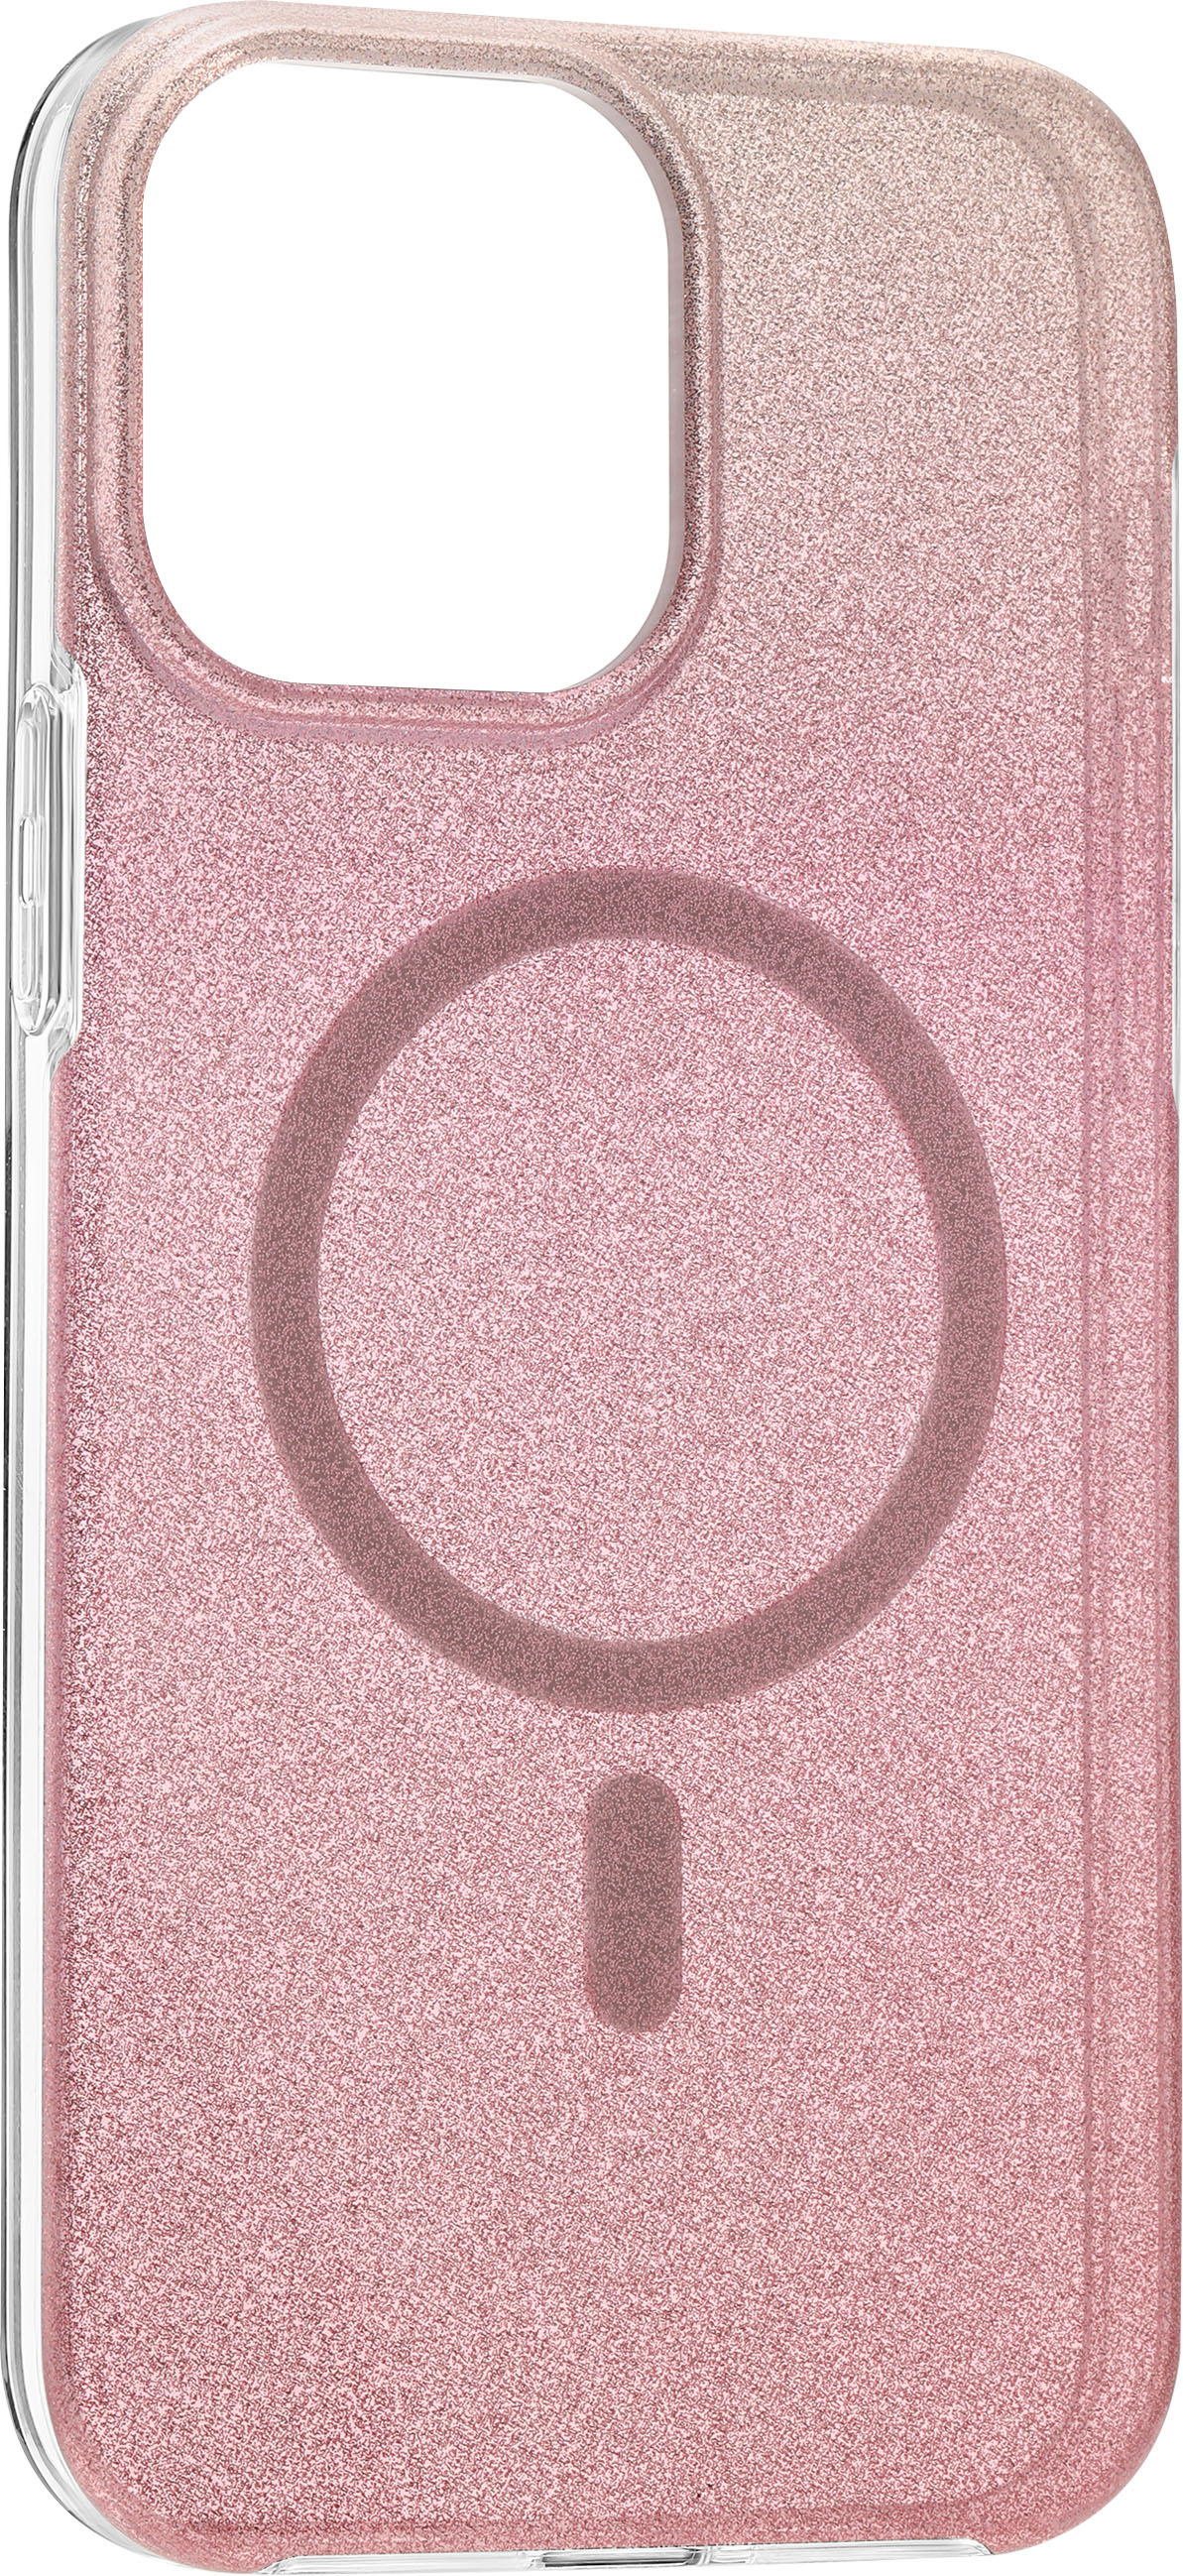 LOUIS VUITTON LV PINK SPARKLE iPhone 12 Pro Max Case Cover